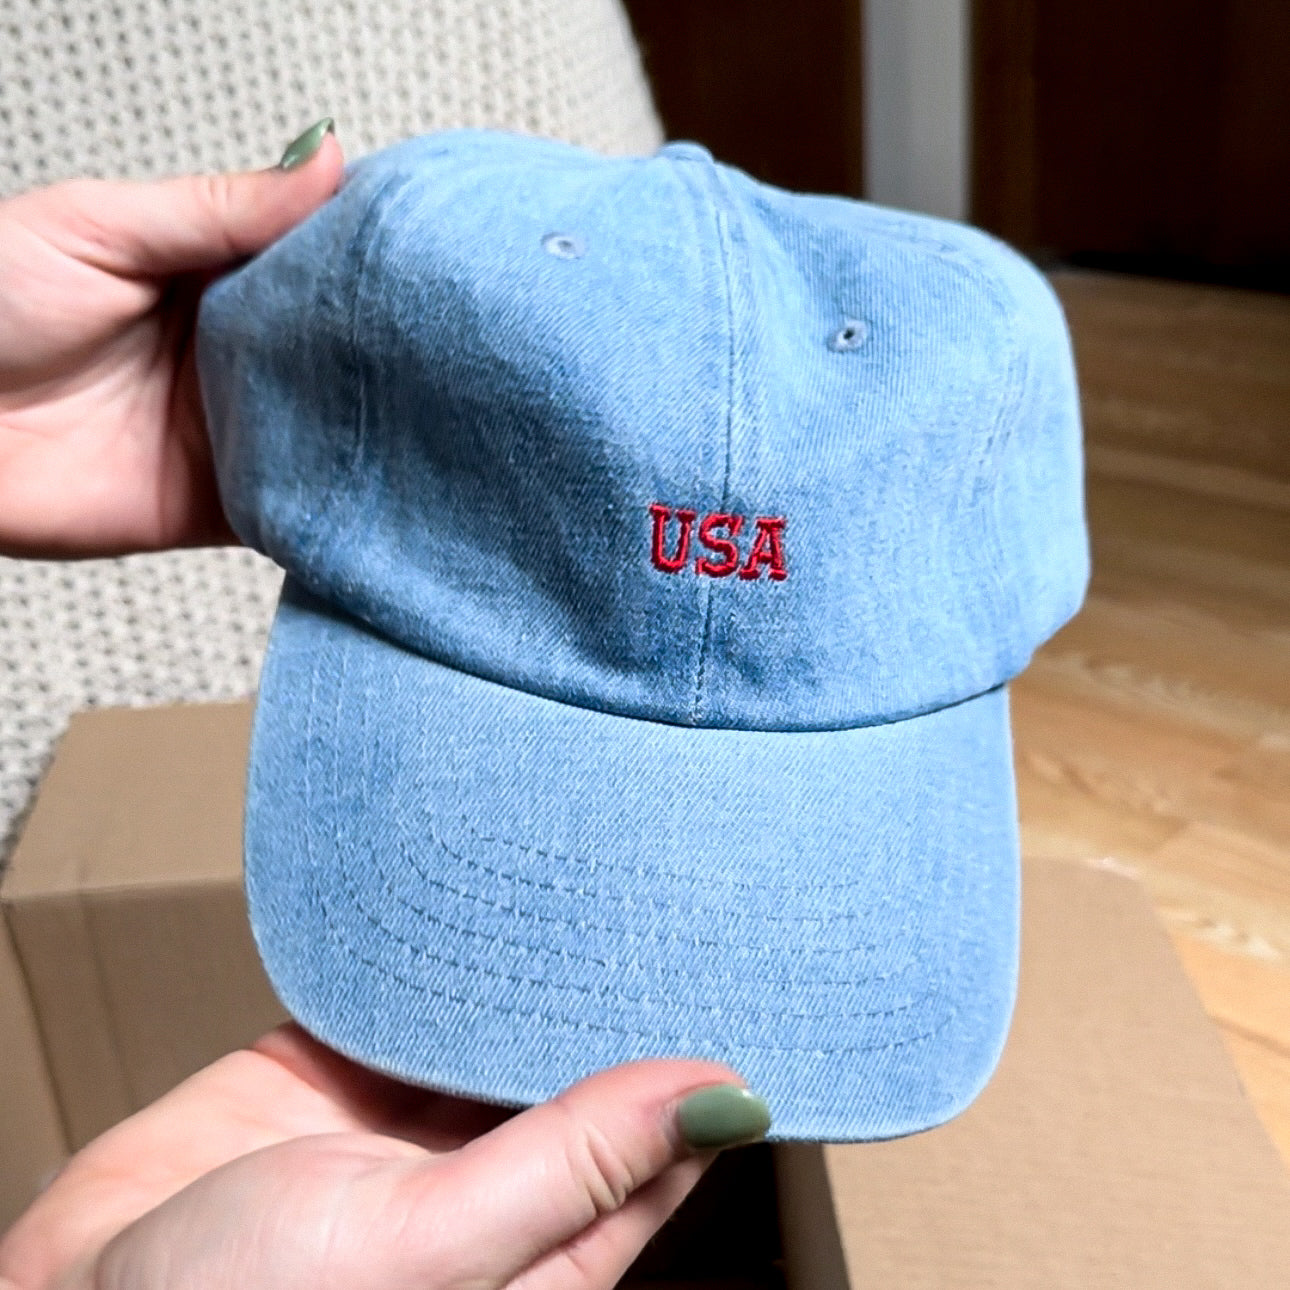 USA Embroidered Denim Hat - Light Blue - LAST ONE